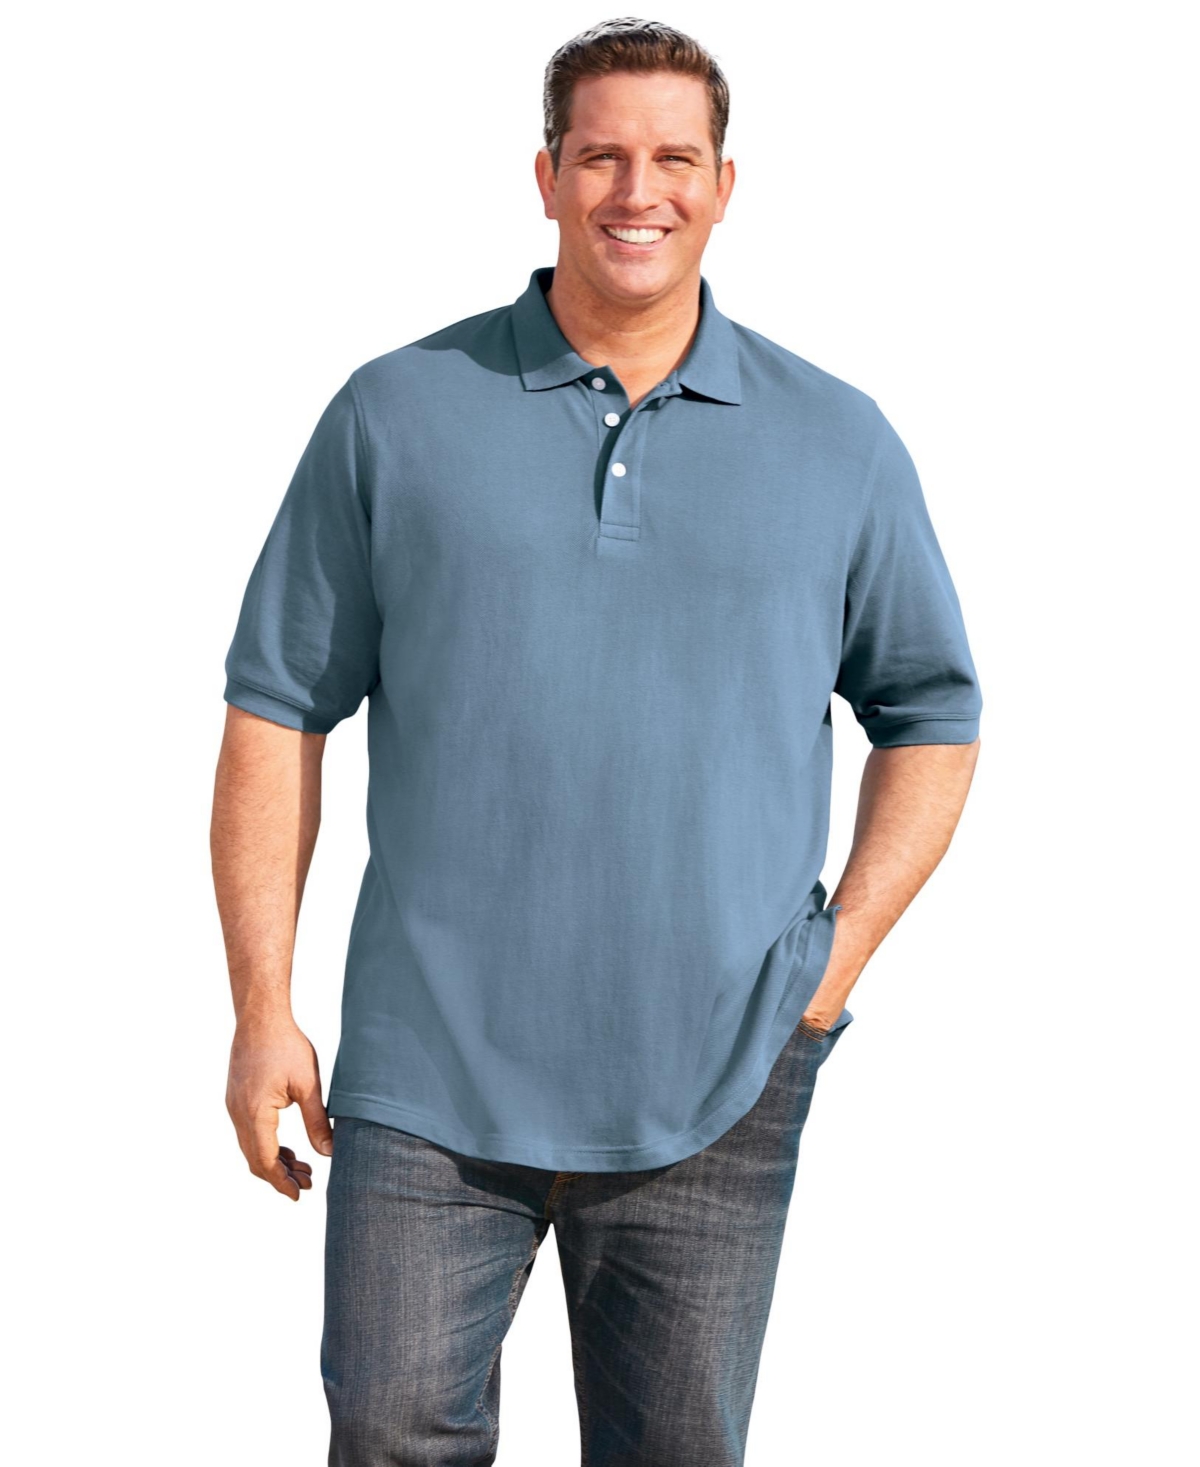 Big & Tall Shrink-Less Pique Polo Shirt - Tie dye stripe